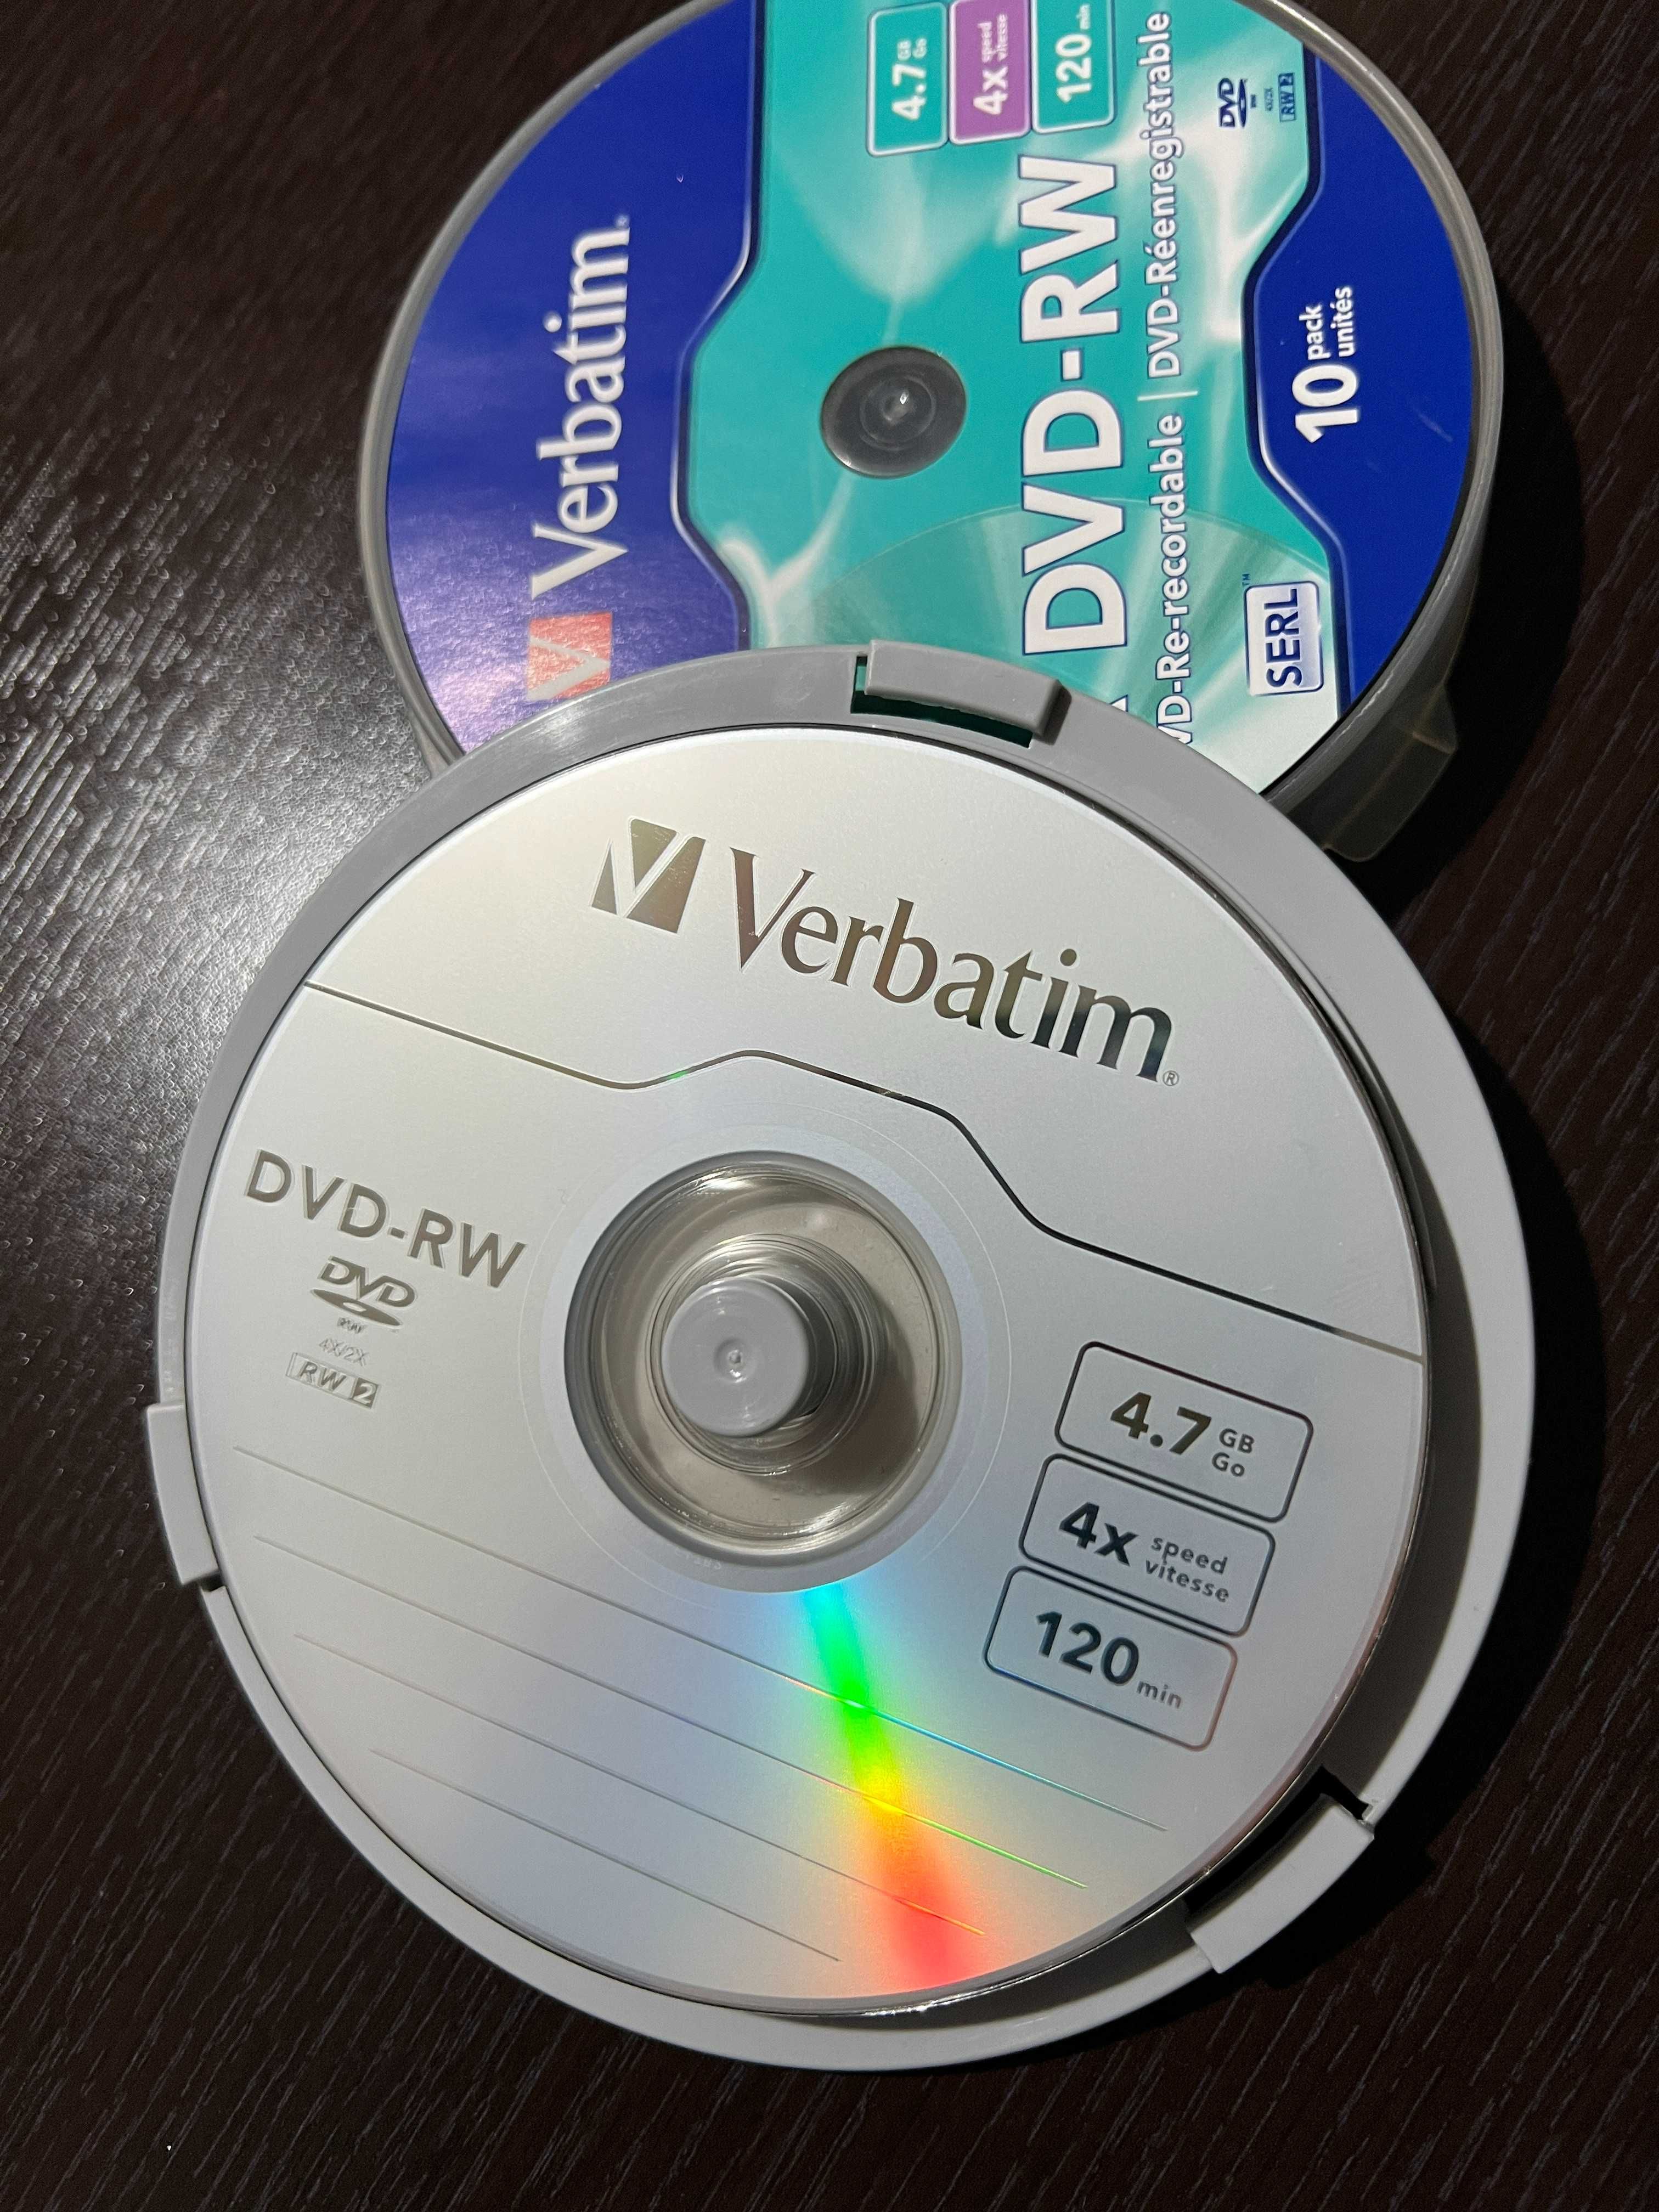 Set 7 x DVD-RW Verbatim noi reinscriptibile 120 min 4.7 GB viteza 4x